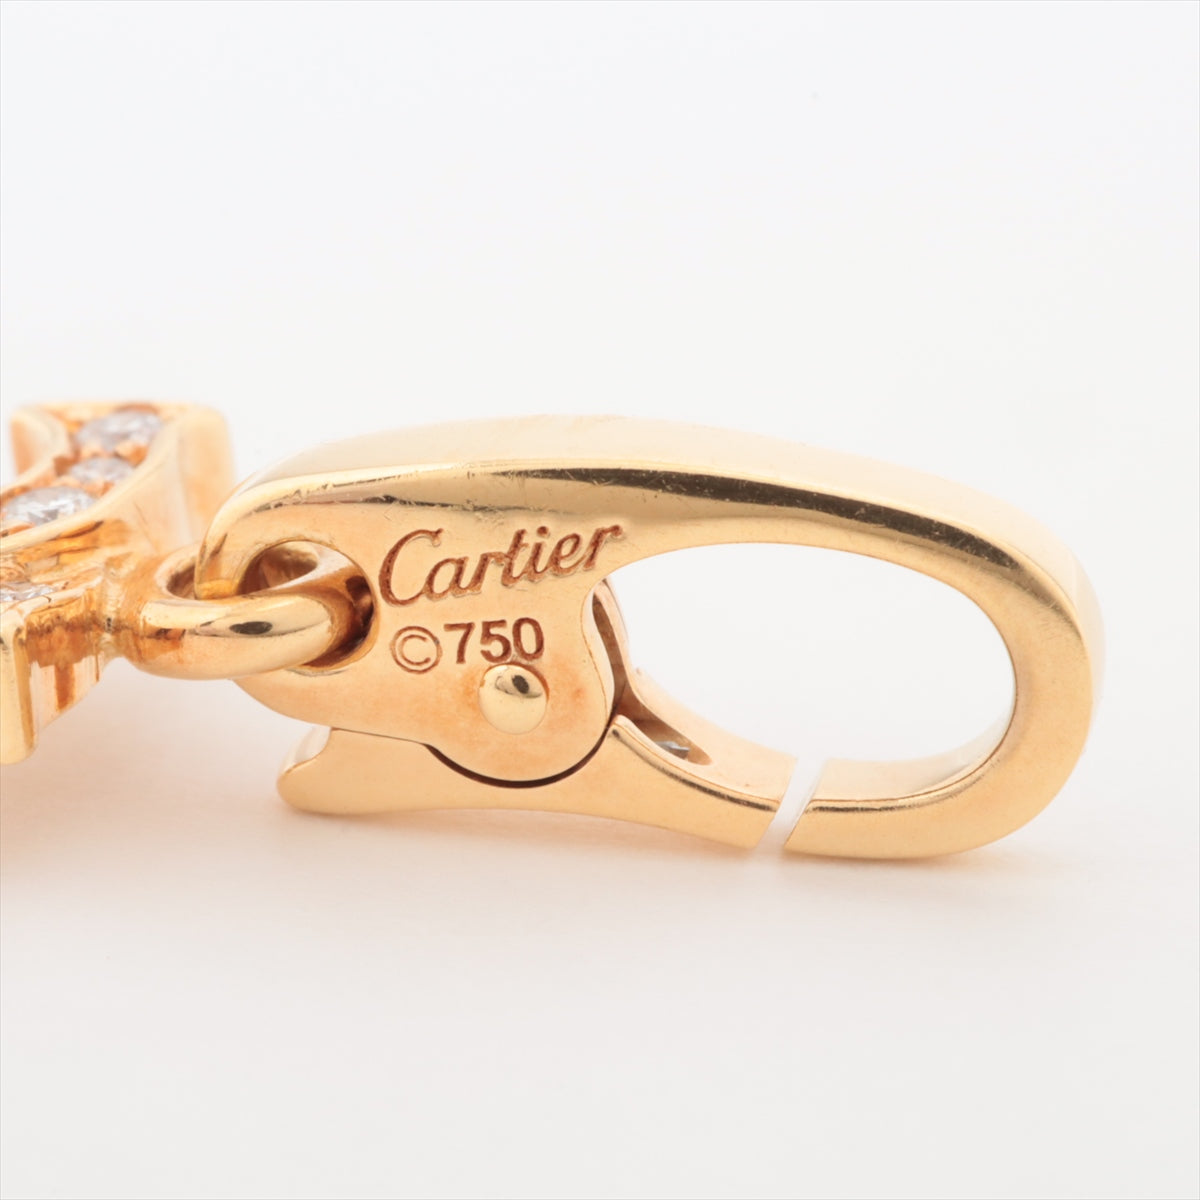 Cartier カルティエ 750 2C ダイヤチャームレディース